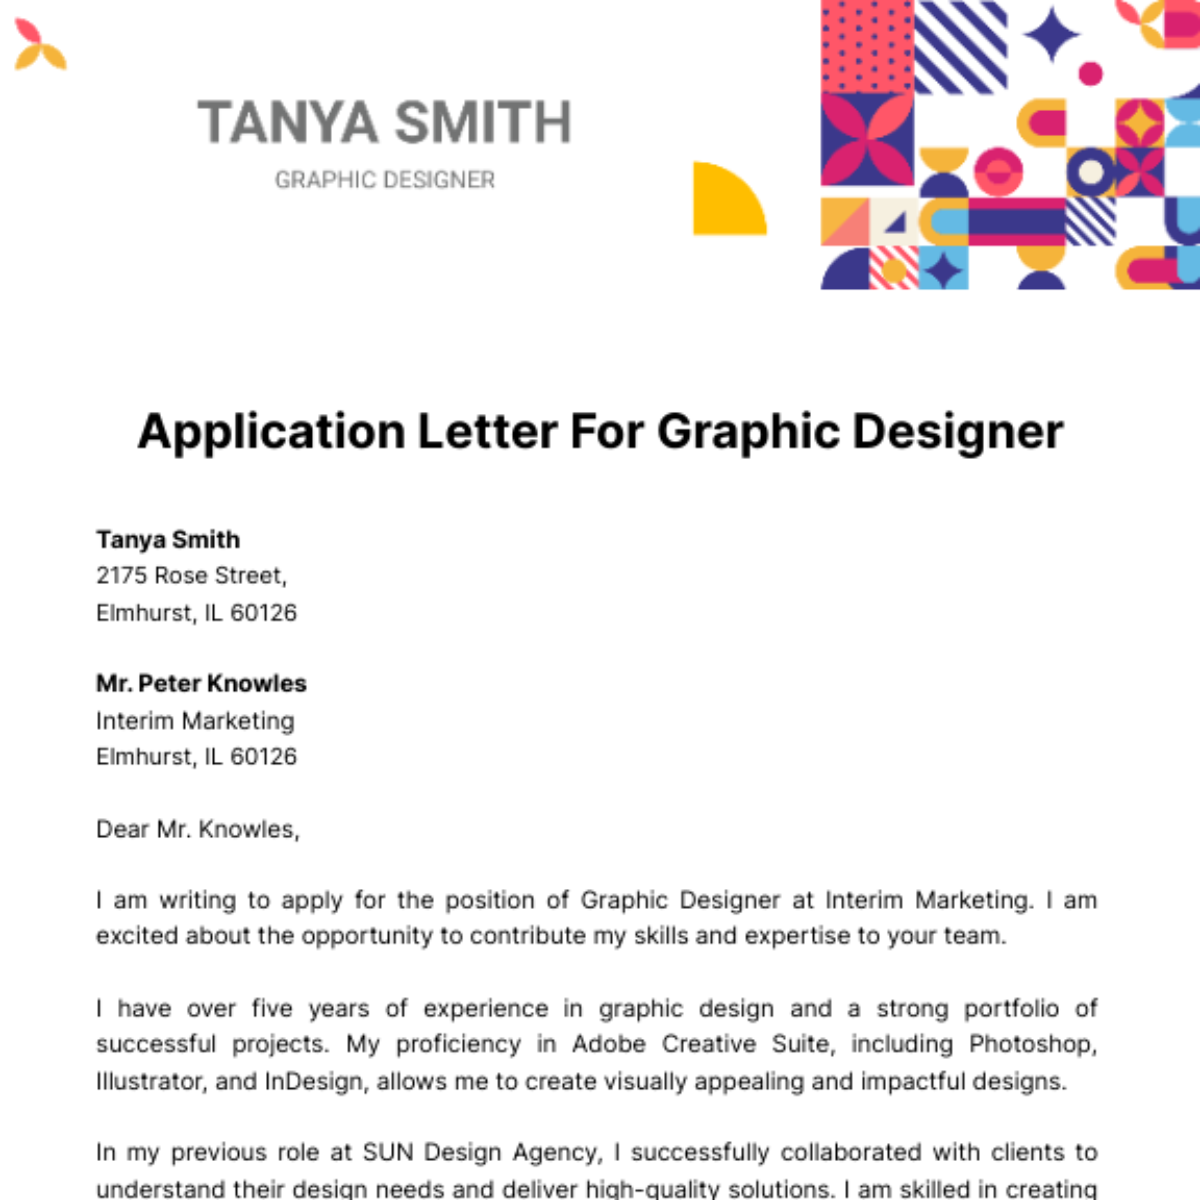 Application Letter for Graphic Designer Template